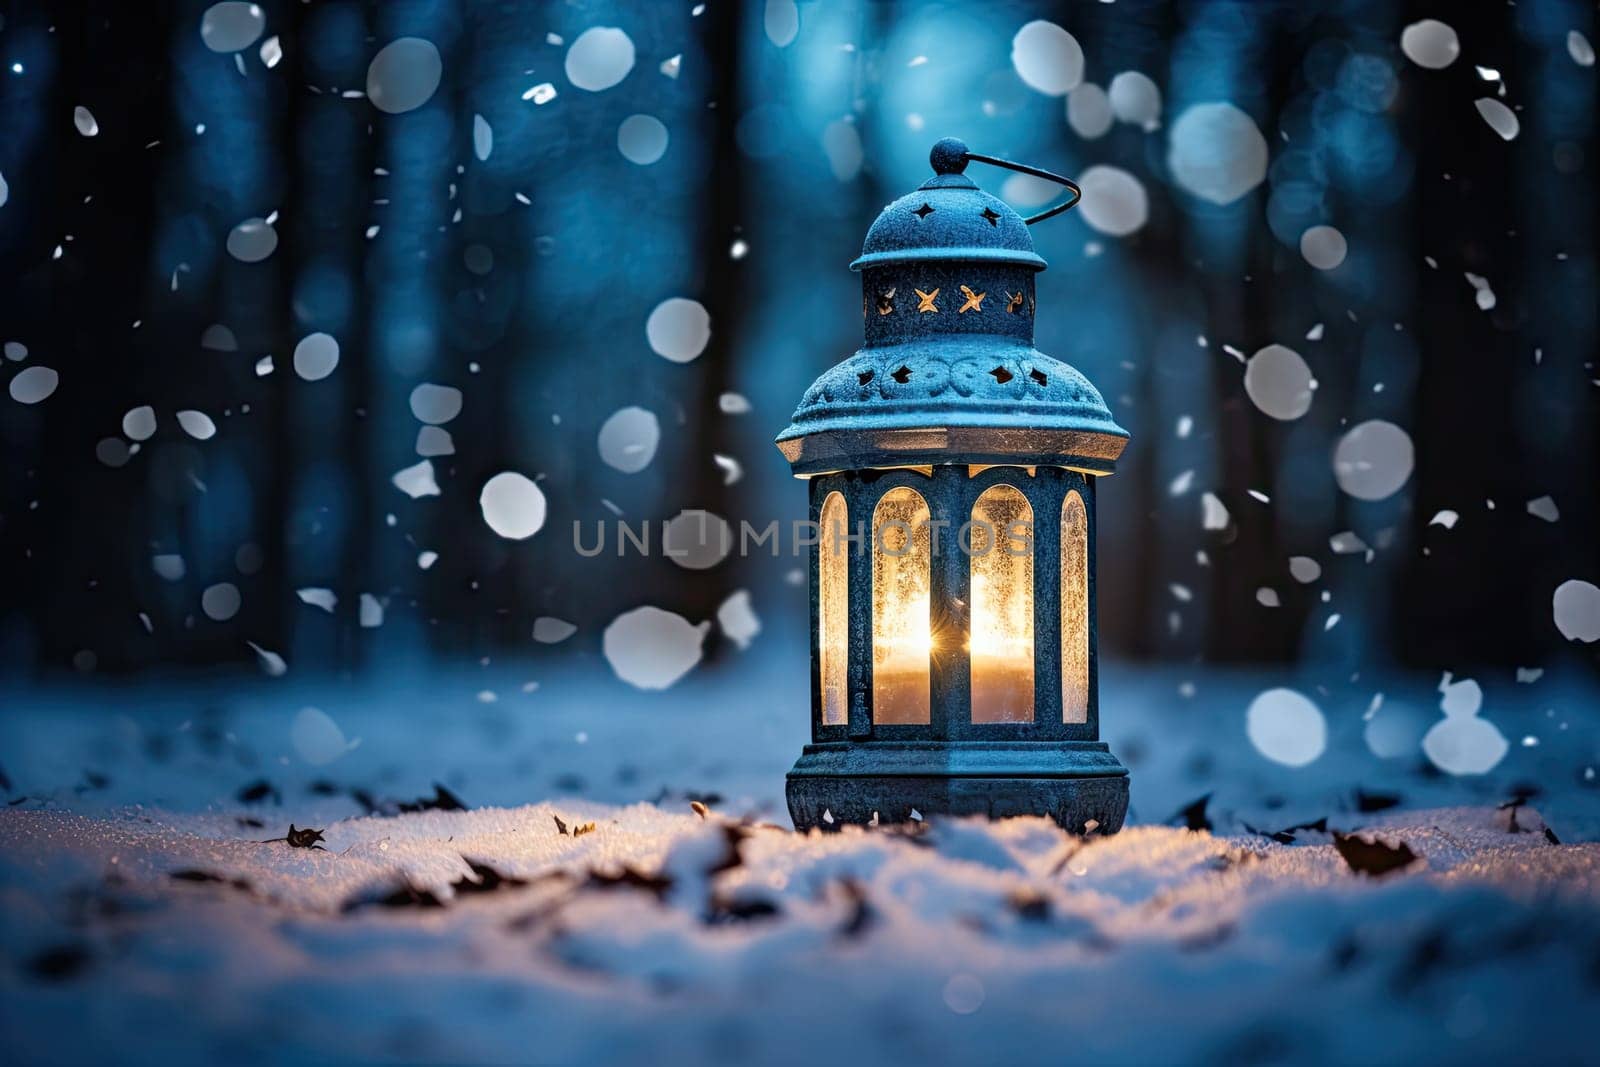 A Serene Glow: A Lantern Illuminating a Snowy Winter Night Created With Generative AI Technology